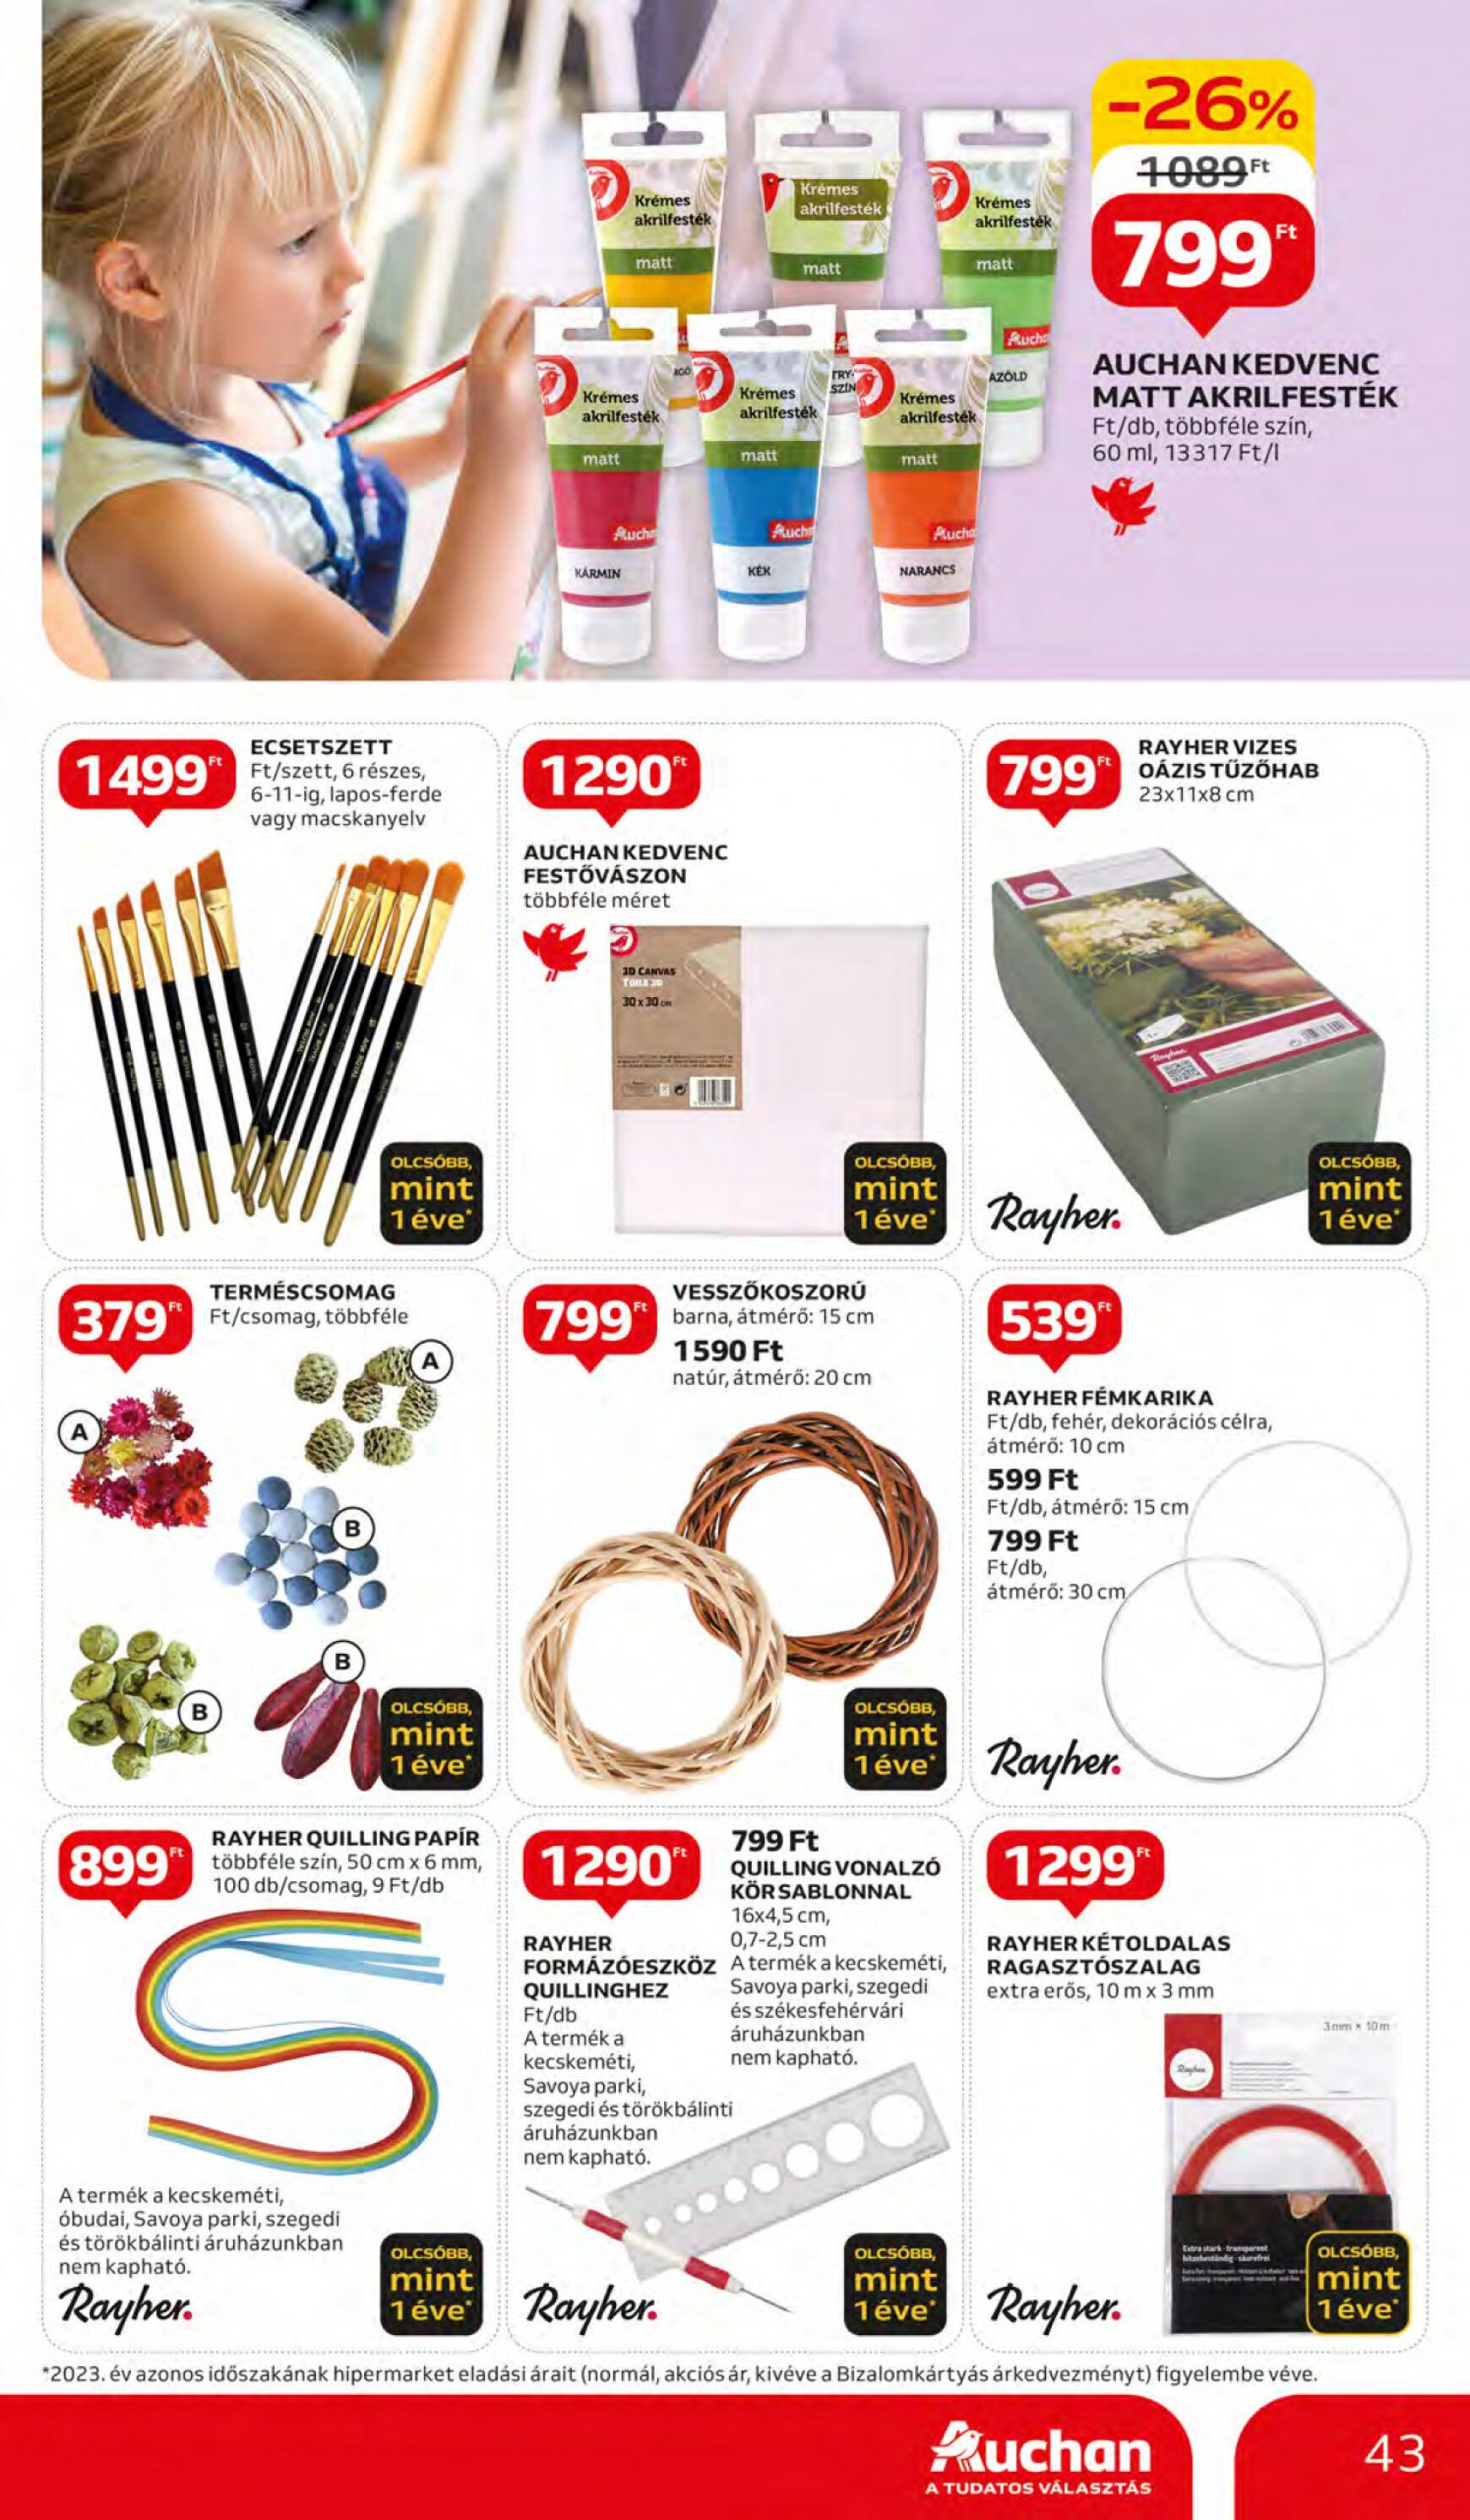 auchan - Aktuális újság Auchan 04.11. - 04.17. - page: 43